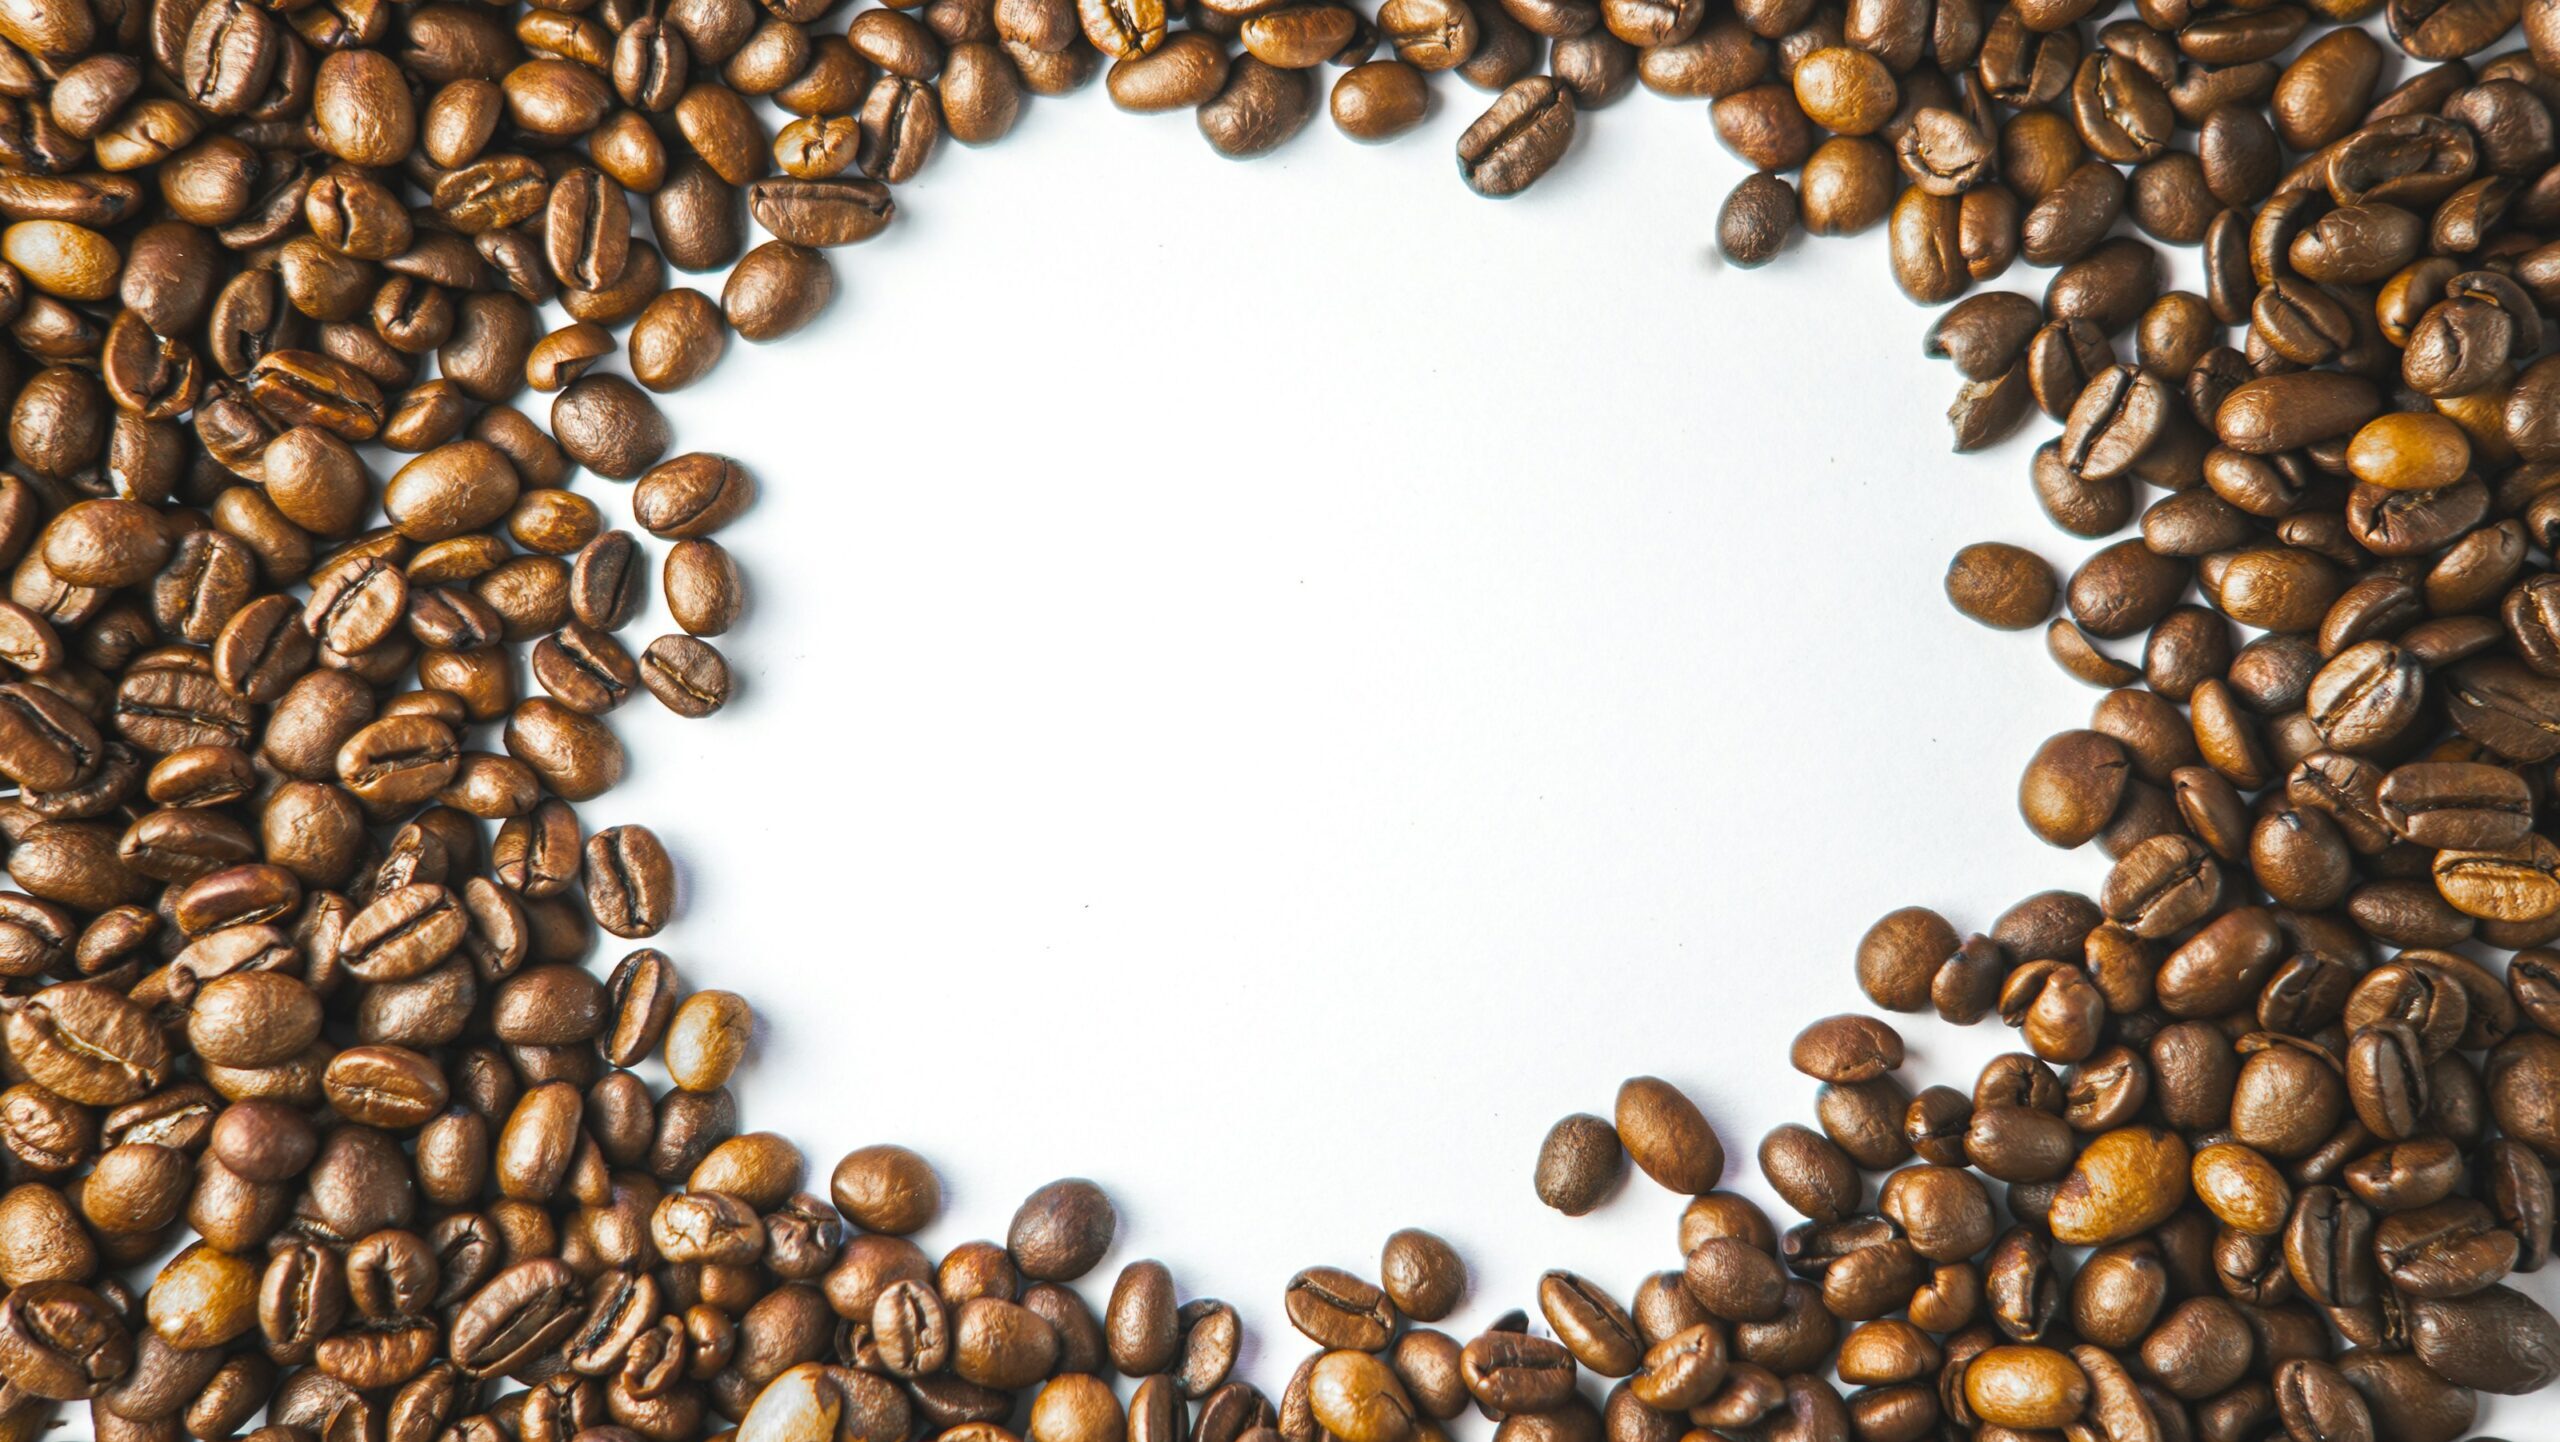 beanless coffee